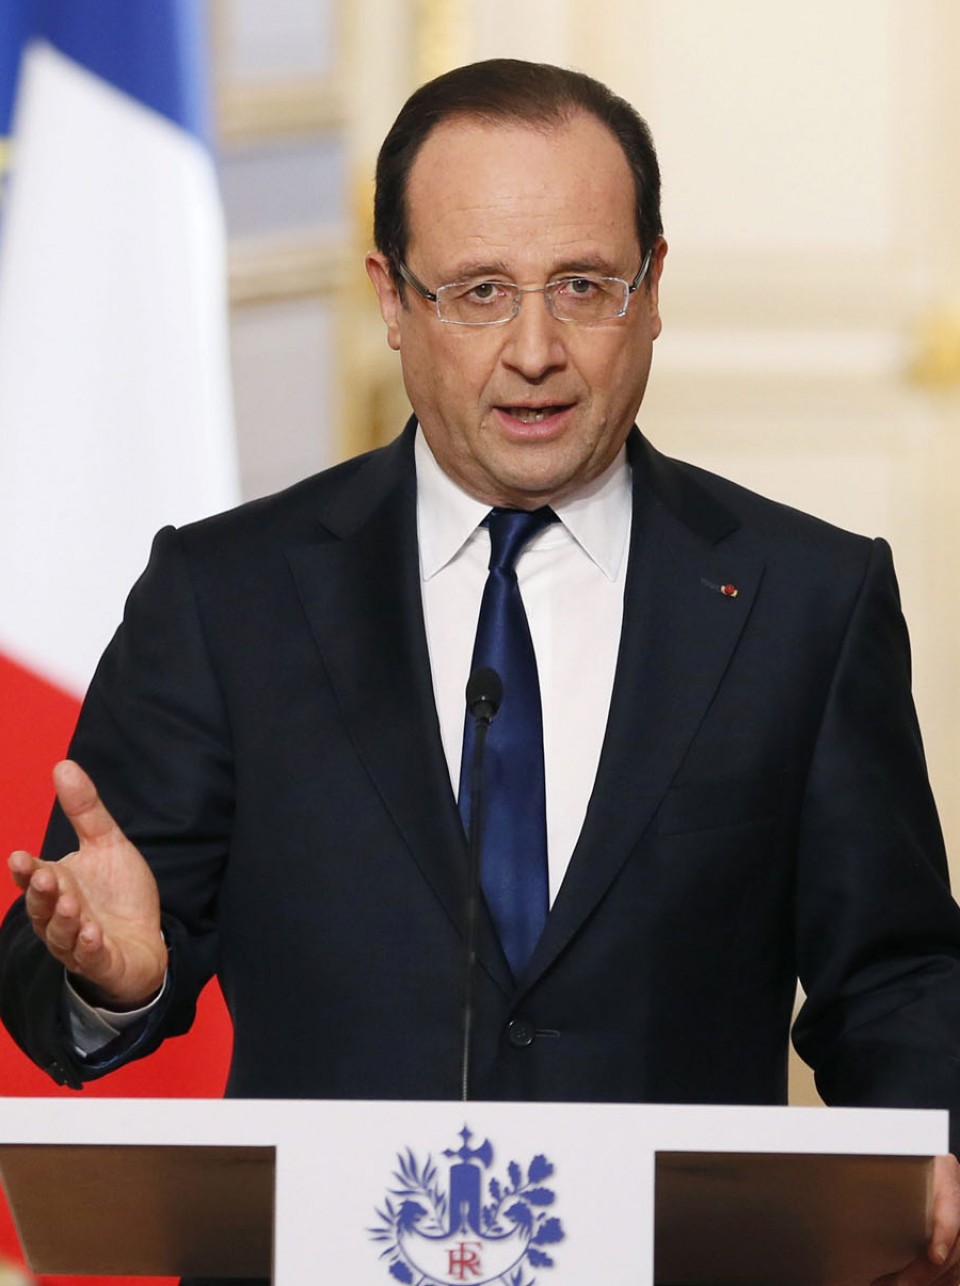 François Hollande Frantziako presidentea.